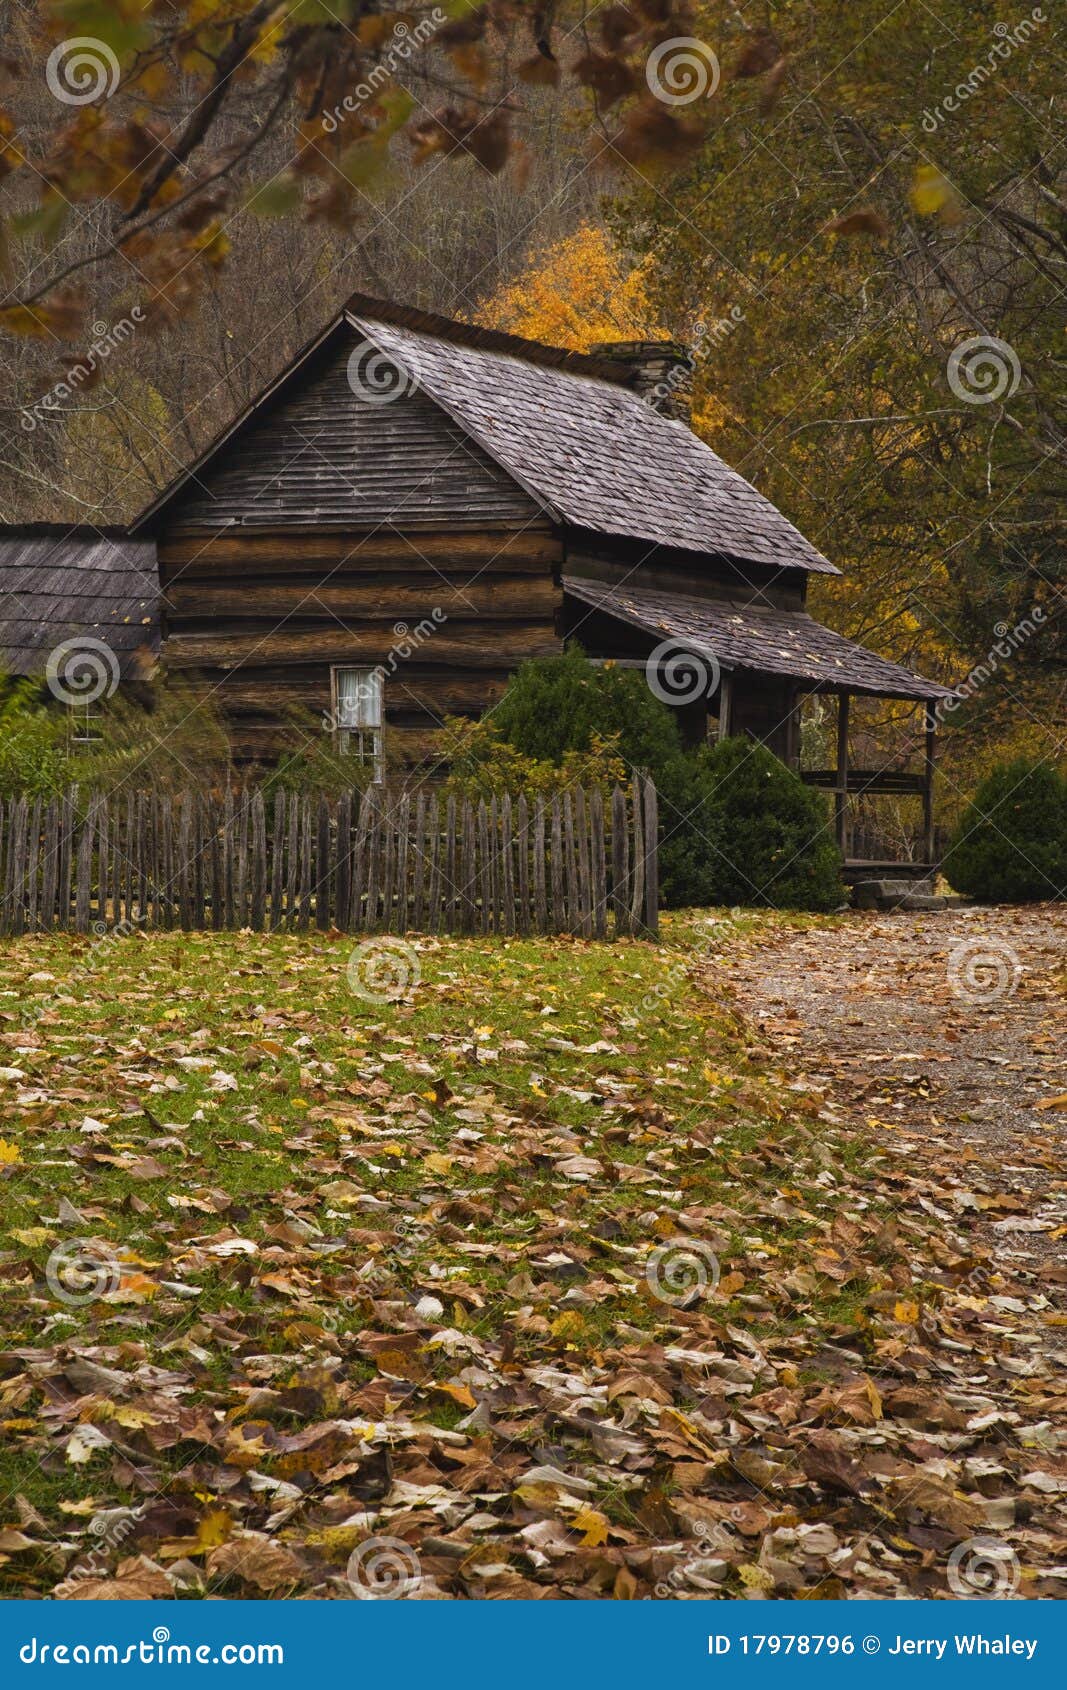 log cabin, oconaluftee pioneer homestead